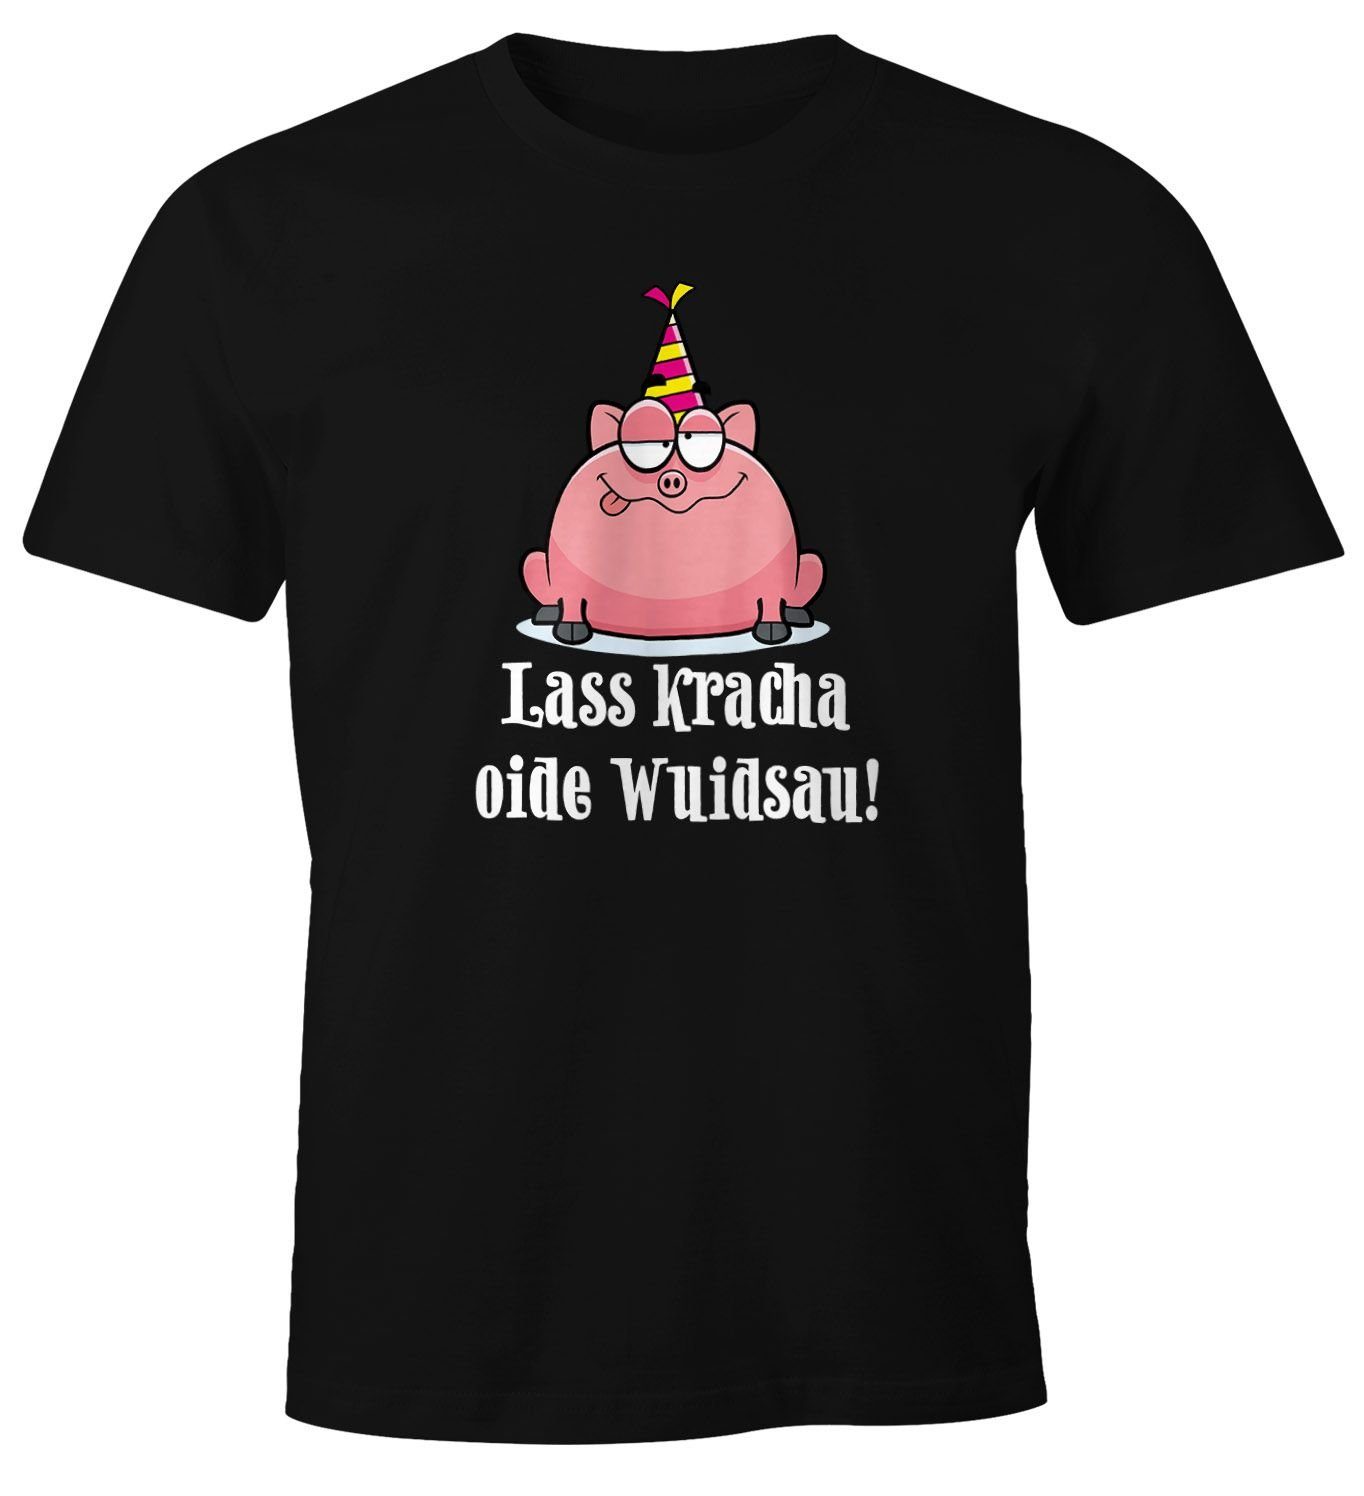 MoonWorks Print-Shirt Herren T-Shirt Geburtstag Schwein Spruch Lass kracha oide Wuidsau Fun-Shirt Geschenk Moonworks® mit Print schwarz | T-Shirts